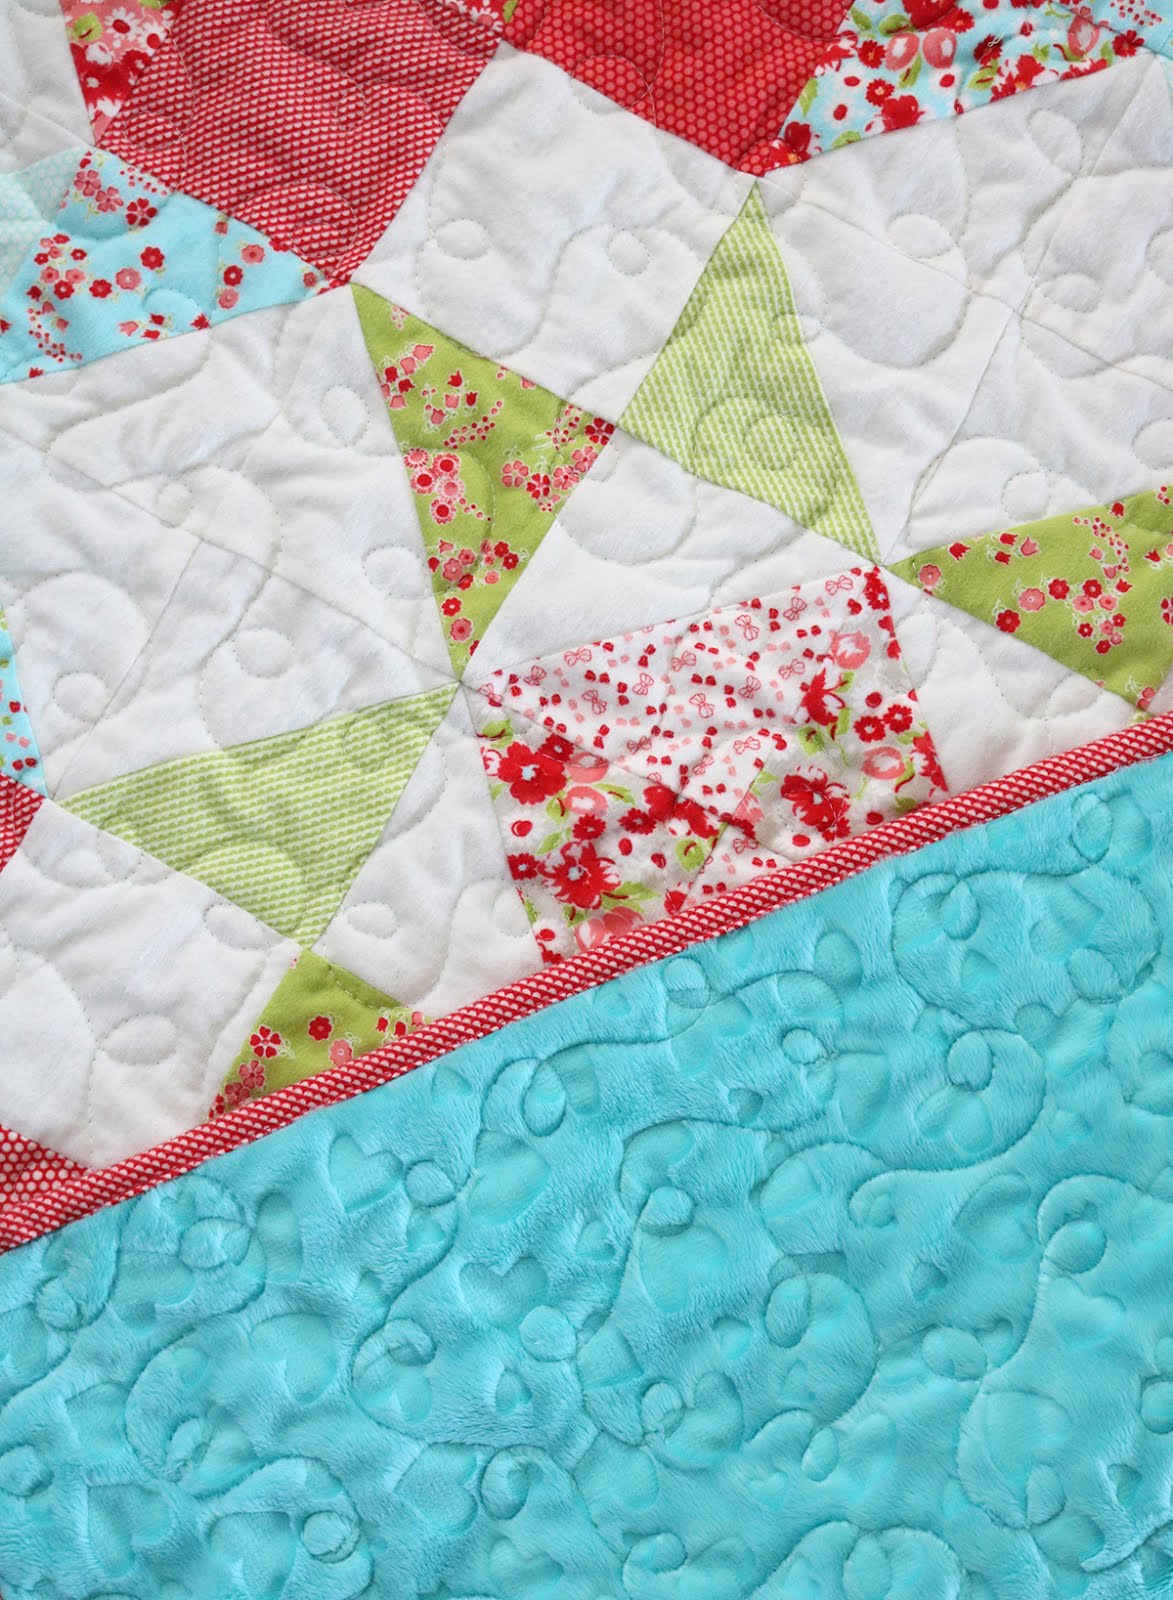 a-bright-corner-15-favorite-free-baby-quilt-patterns